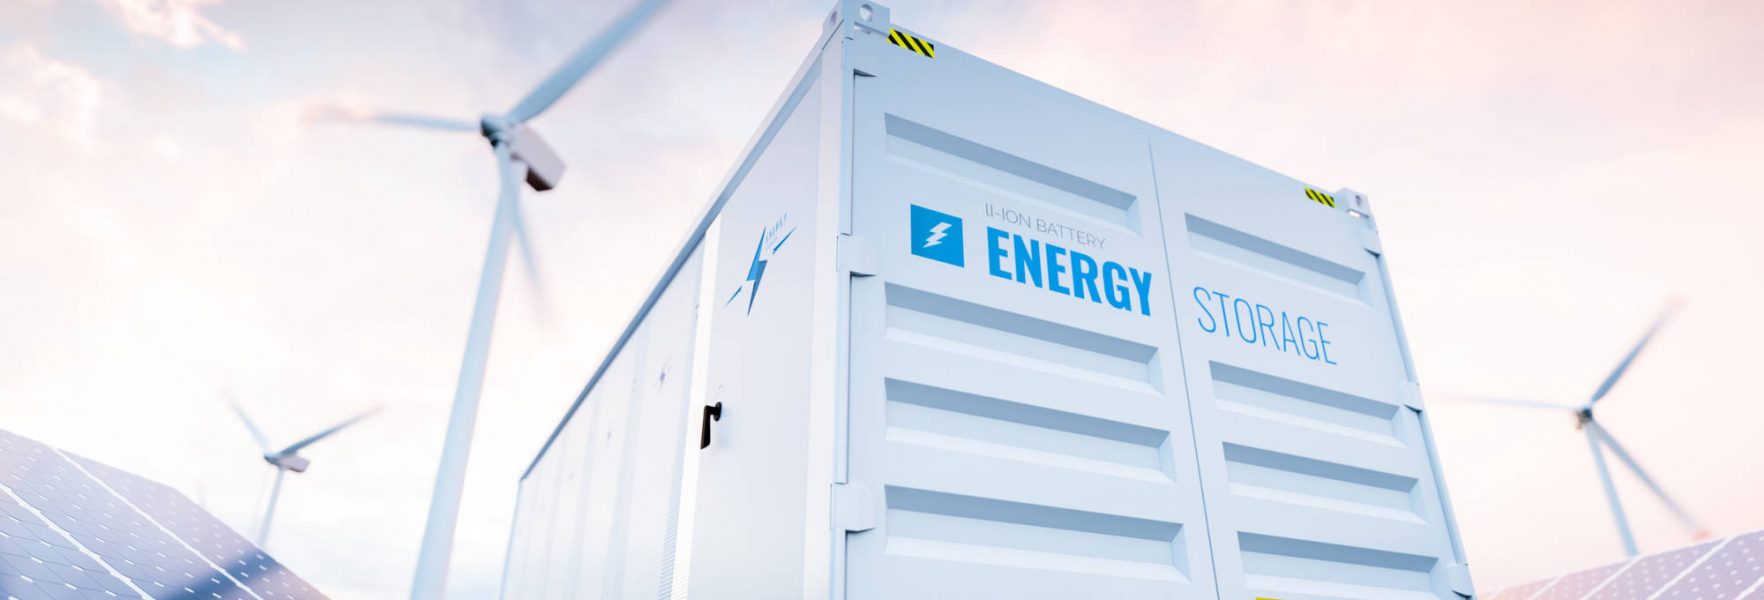 Battery energy storage